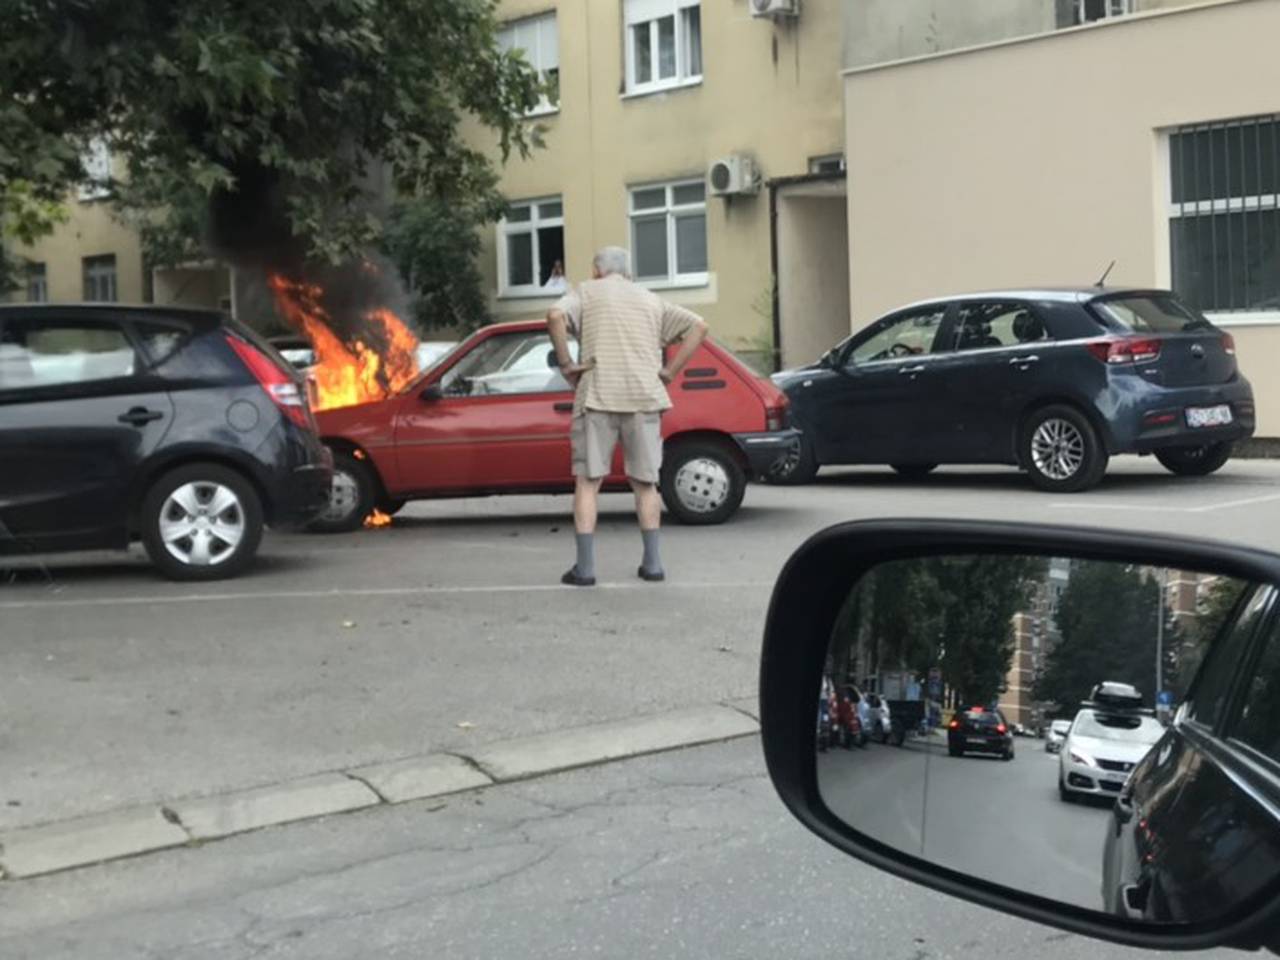 Planuo auto u Varaždinu, vozač je bespomoćno gledao požar...